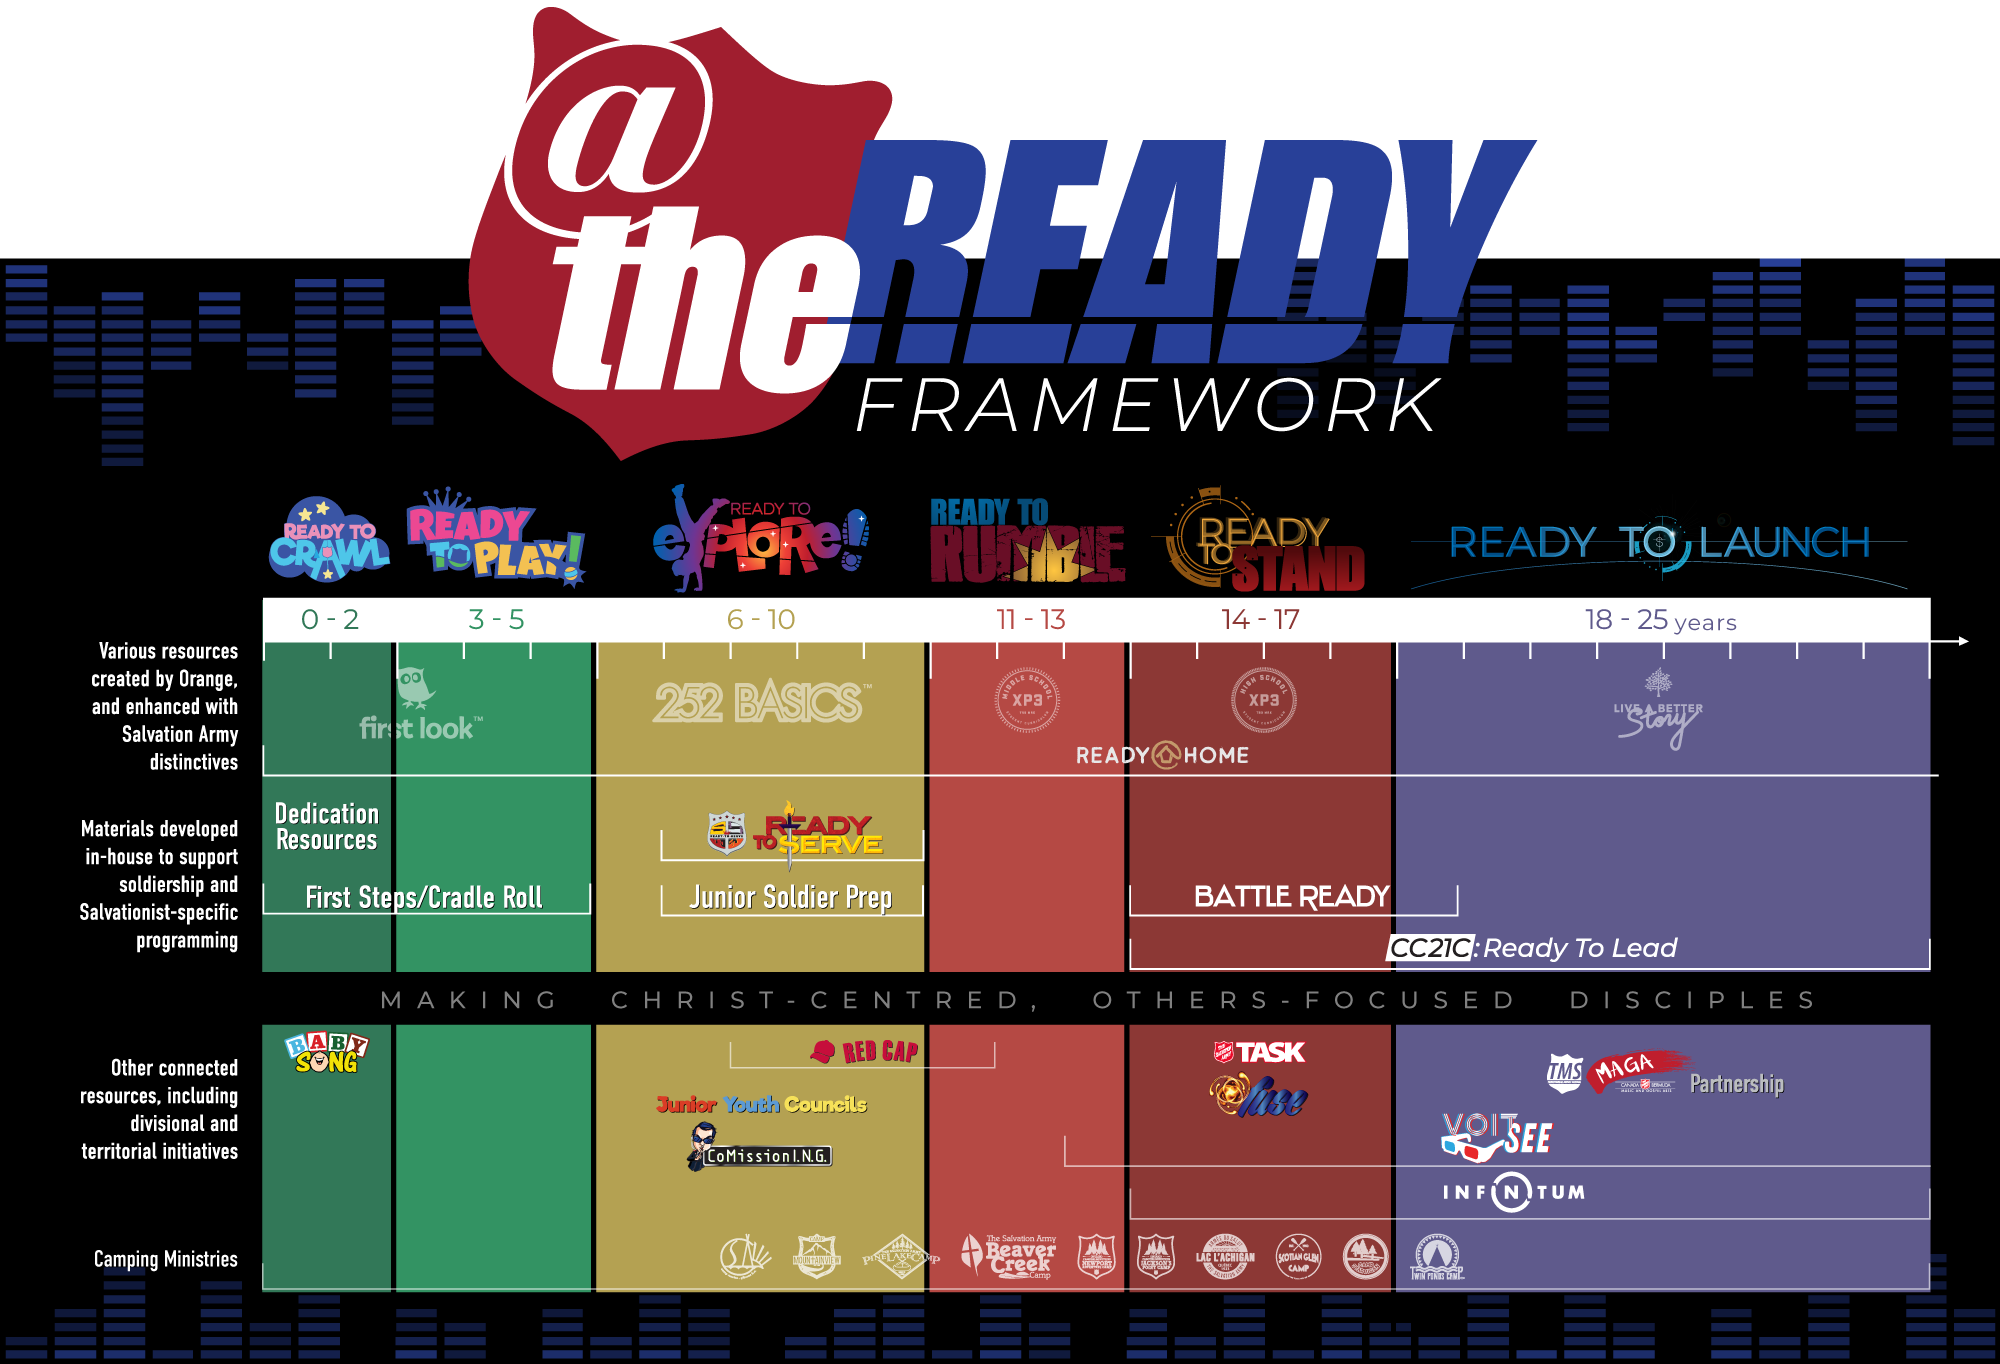 @theReady Framework